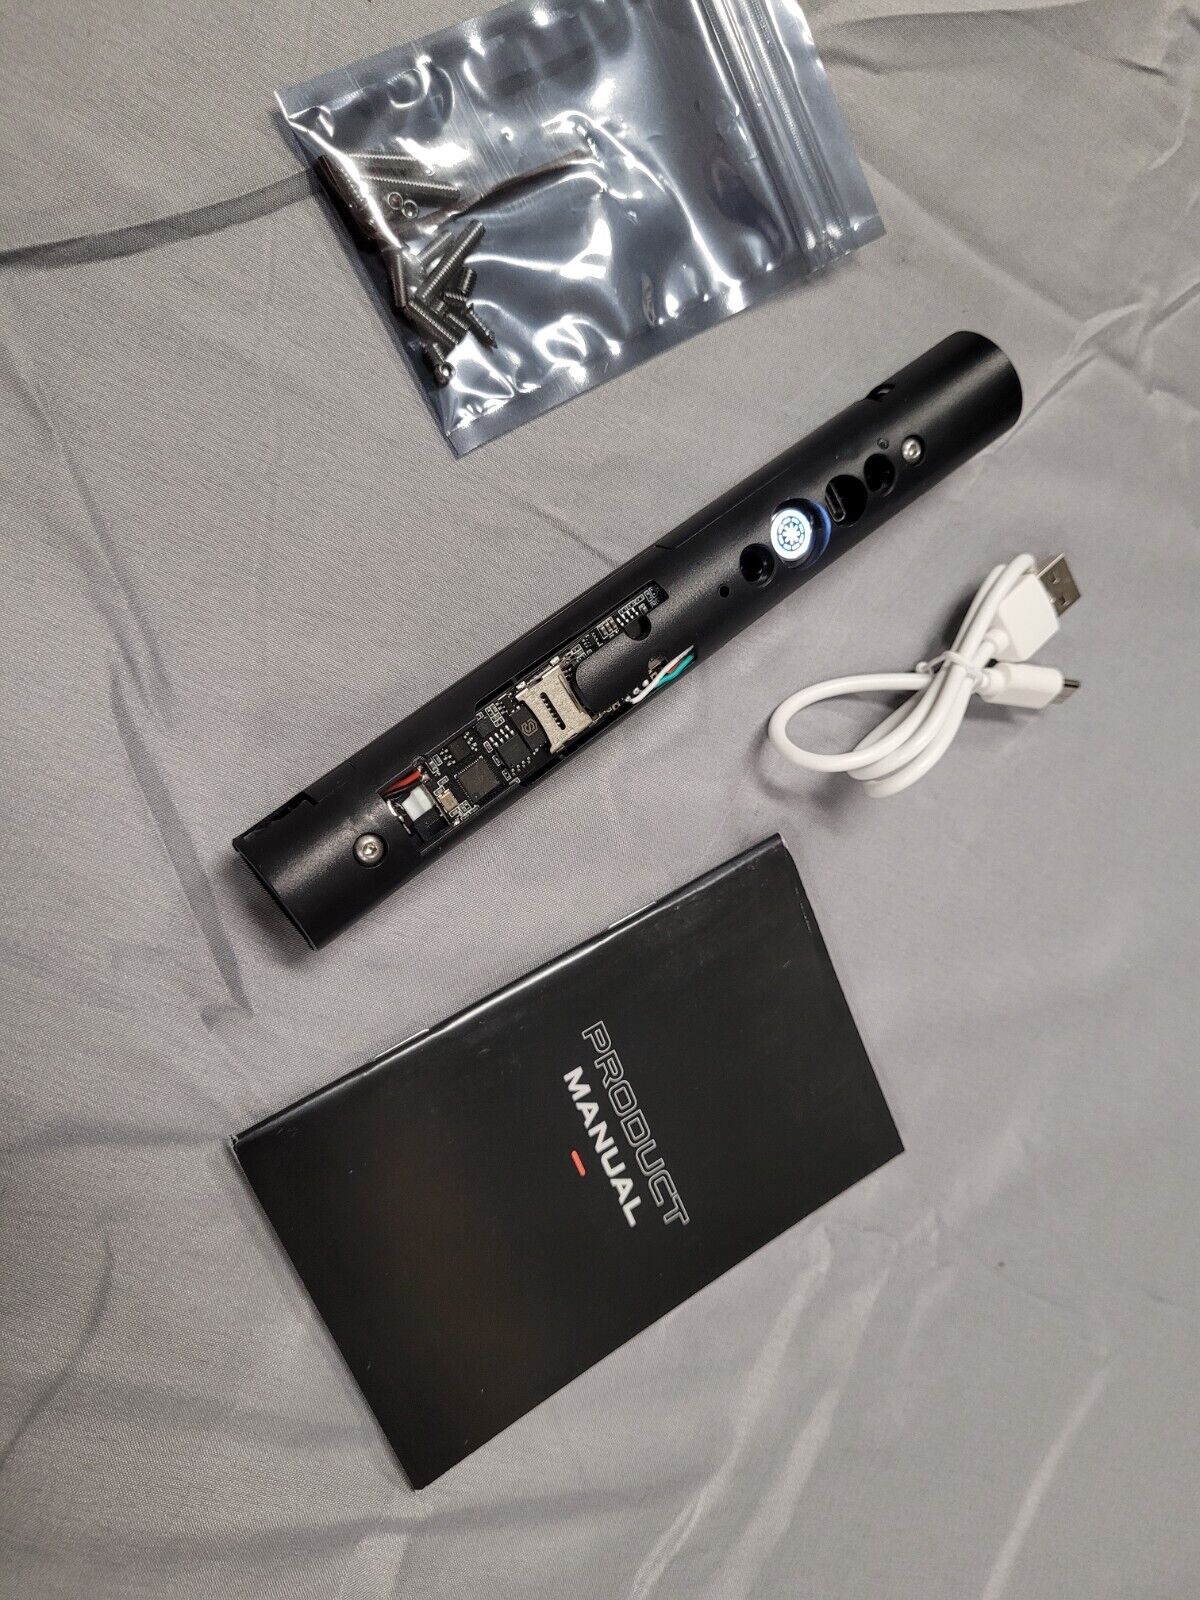 Lightsaber Sound Module Light saber Chassis Base lit Xeno V3 SD card Bluetooth